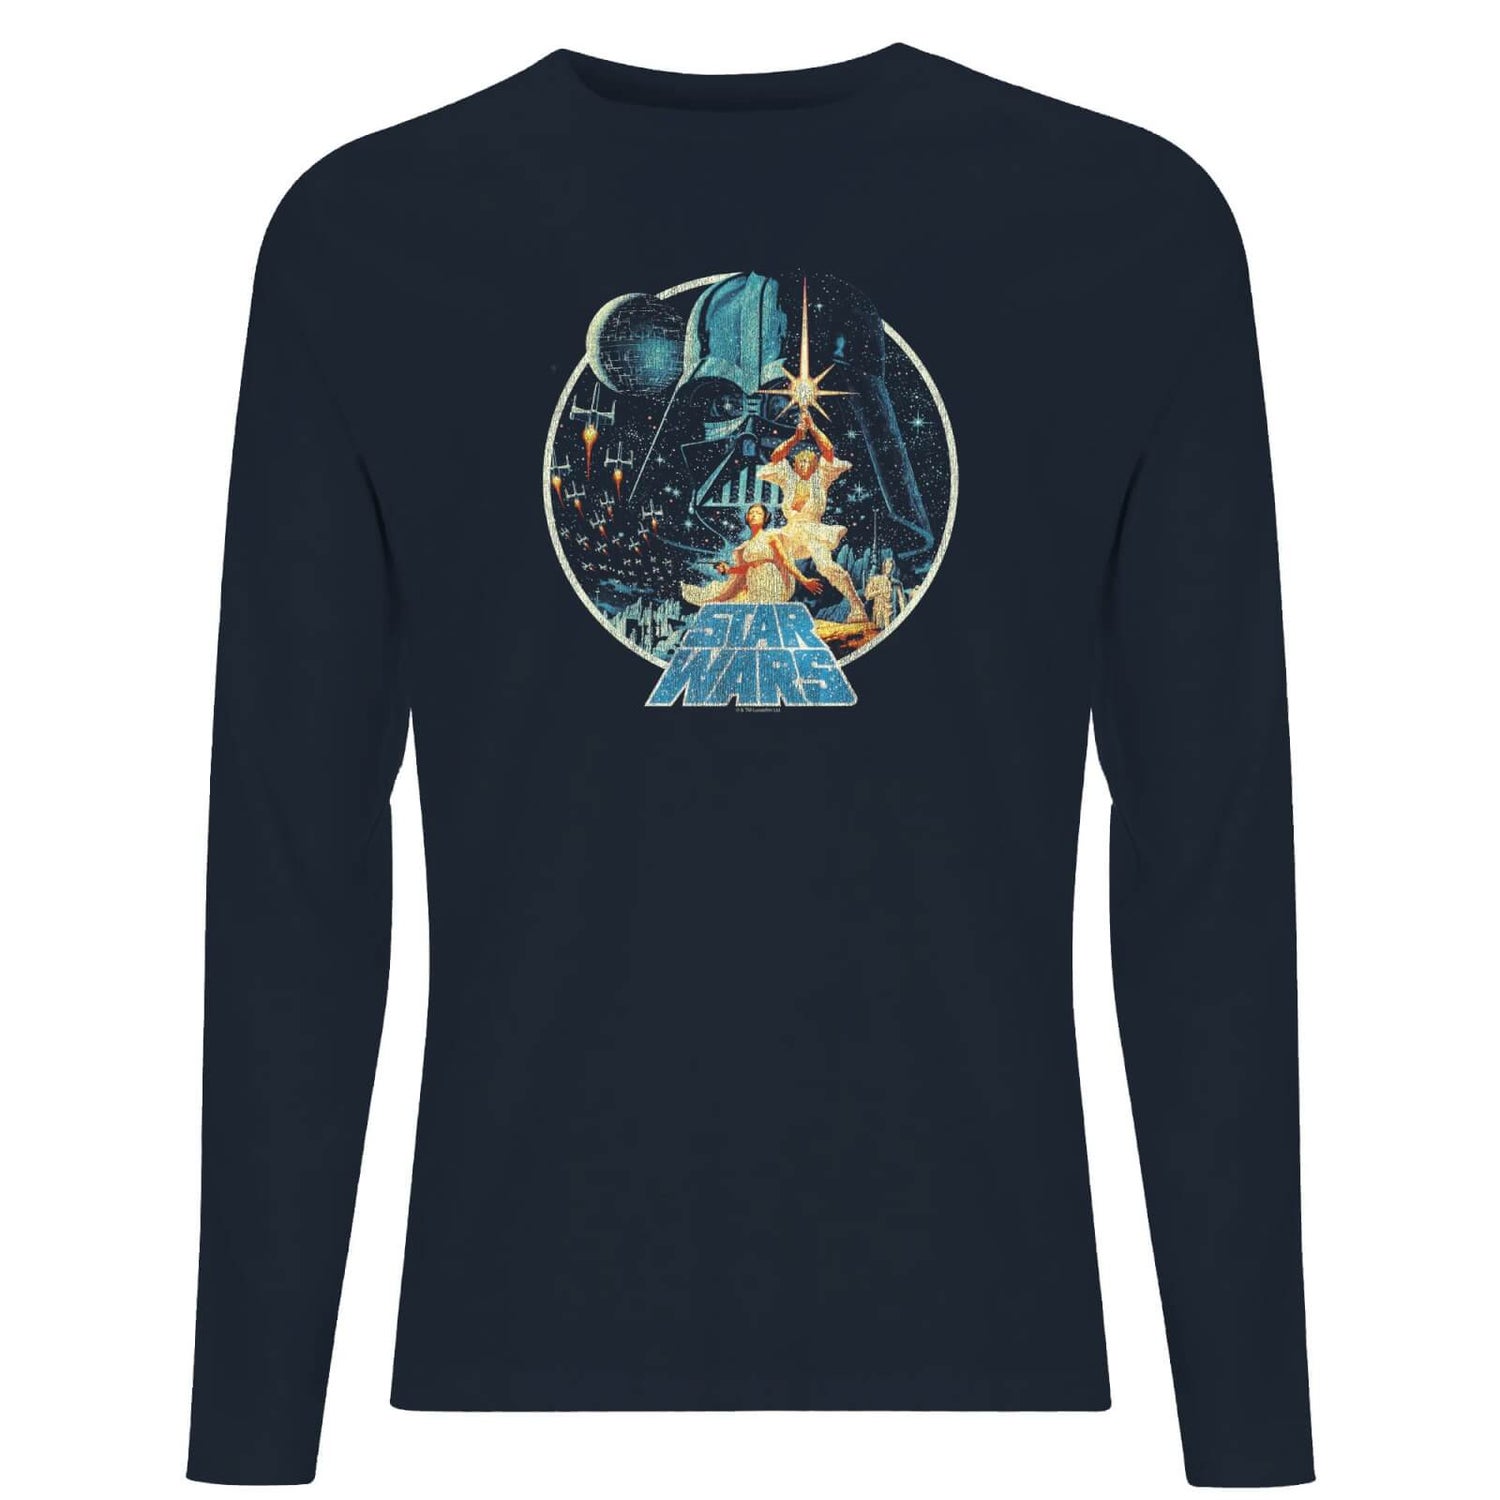 Camiseta de manga larga Classic Vintage Victory para hombre de Star Wars - Azul marino